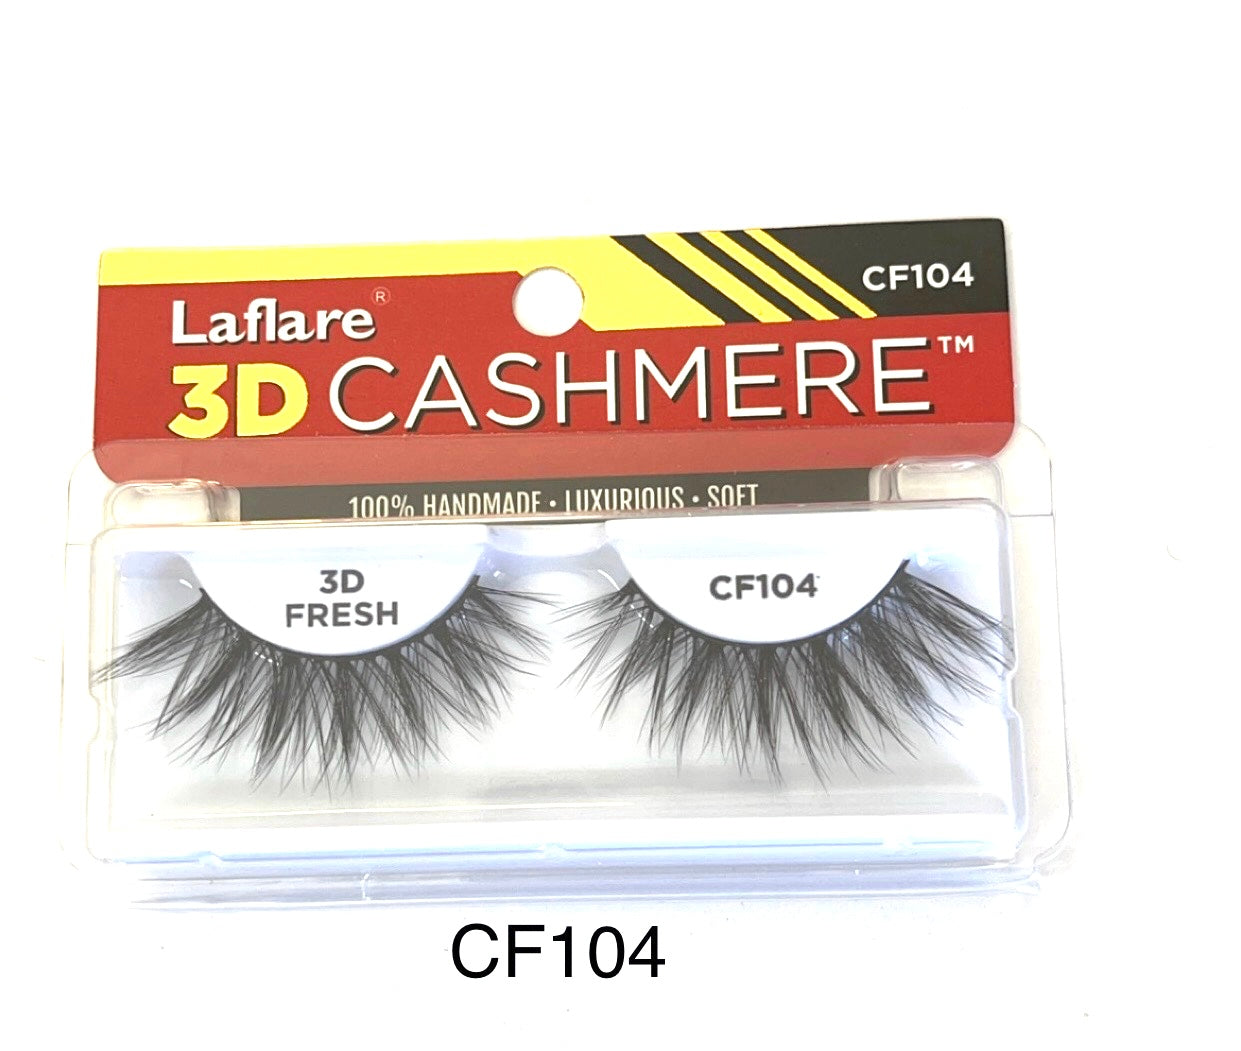 Laflare 3D Cashmere CF104